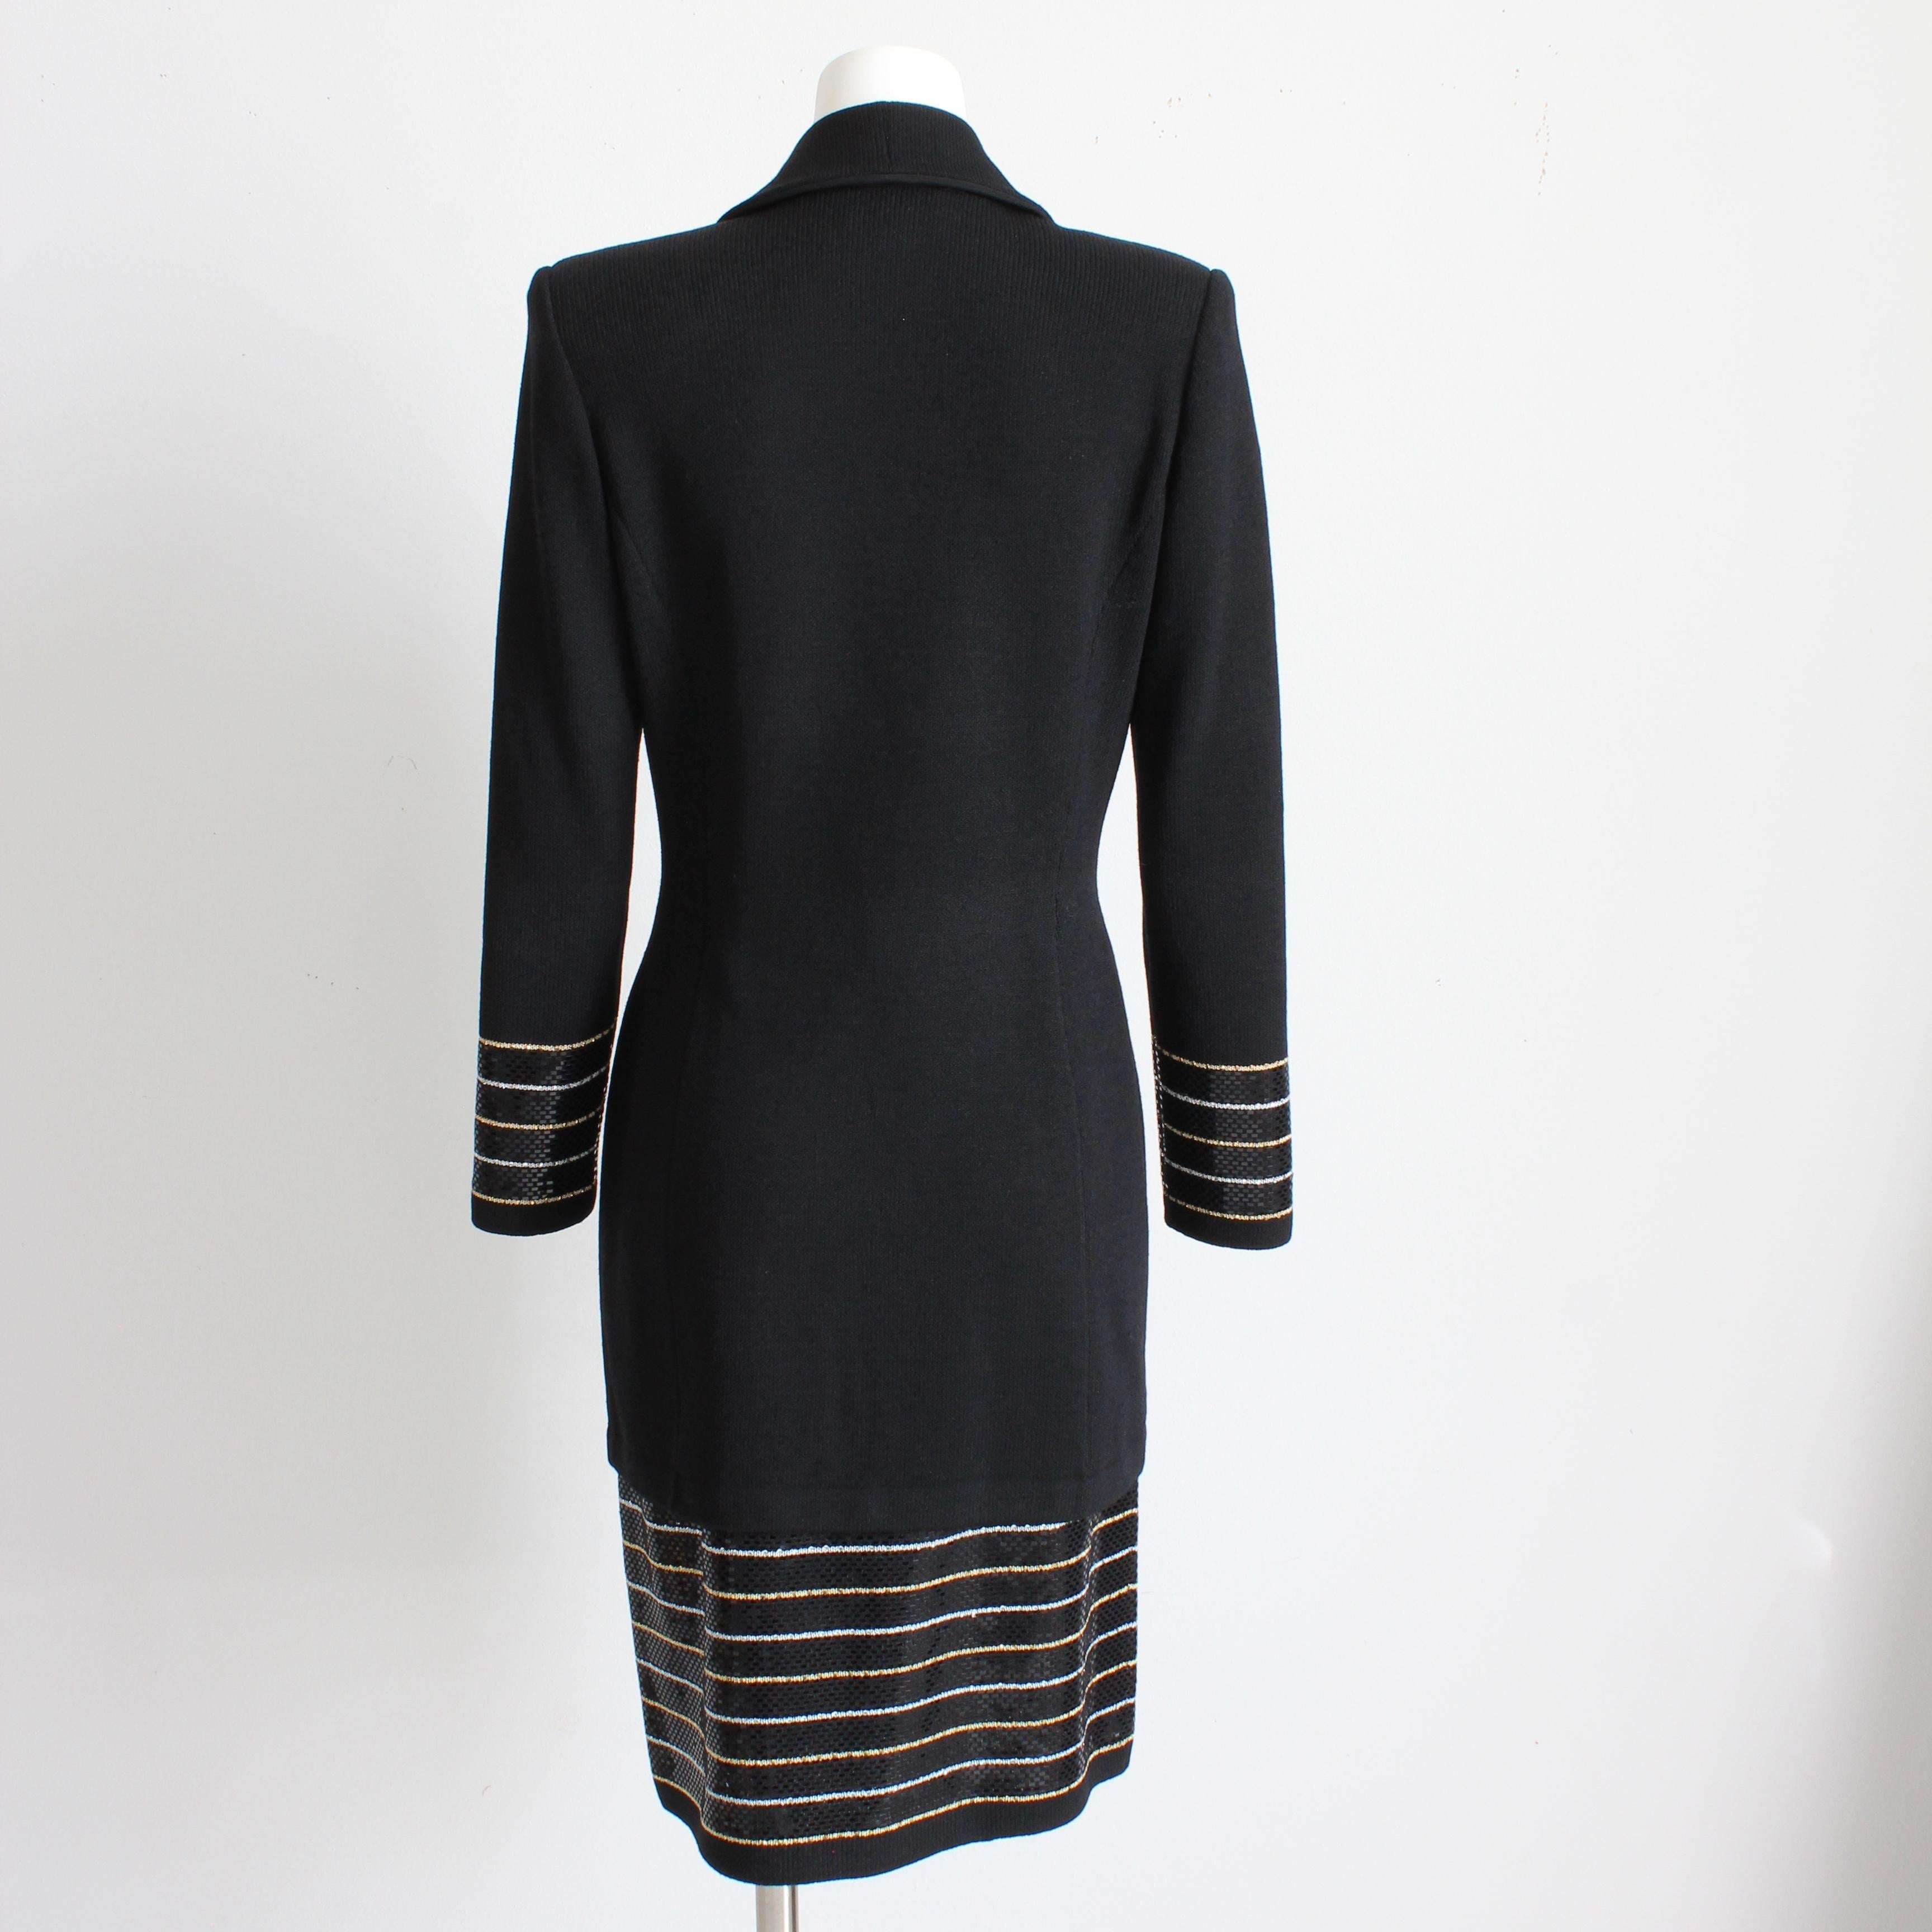 St John Suit Evening 2pc Jacket & Skirt Embellished Knit Black Gold White Sz 6  For Sale 1